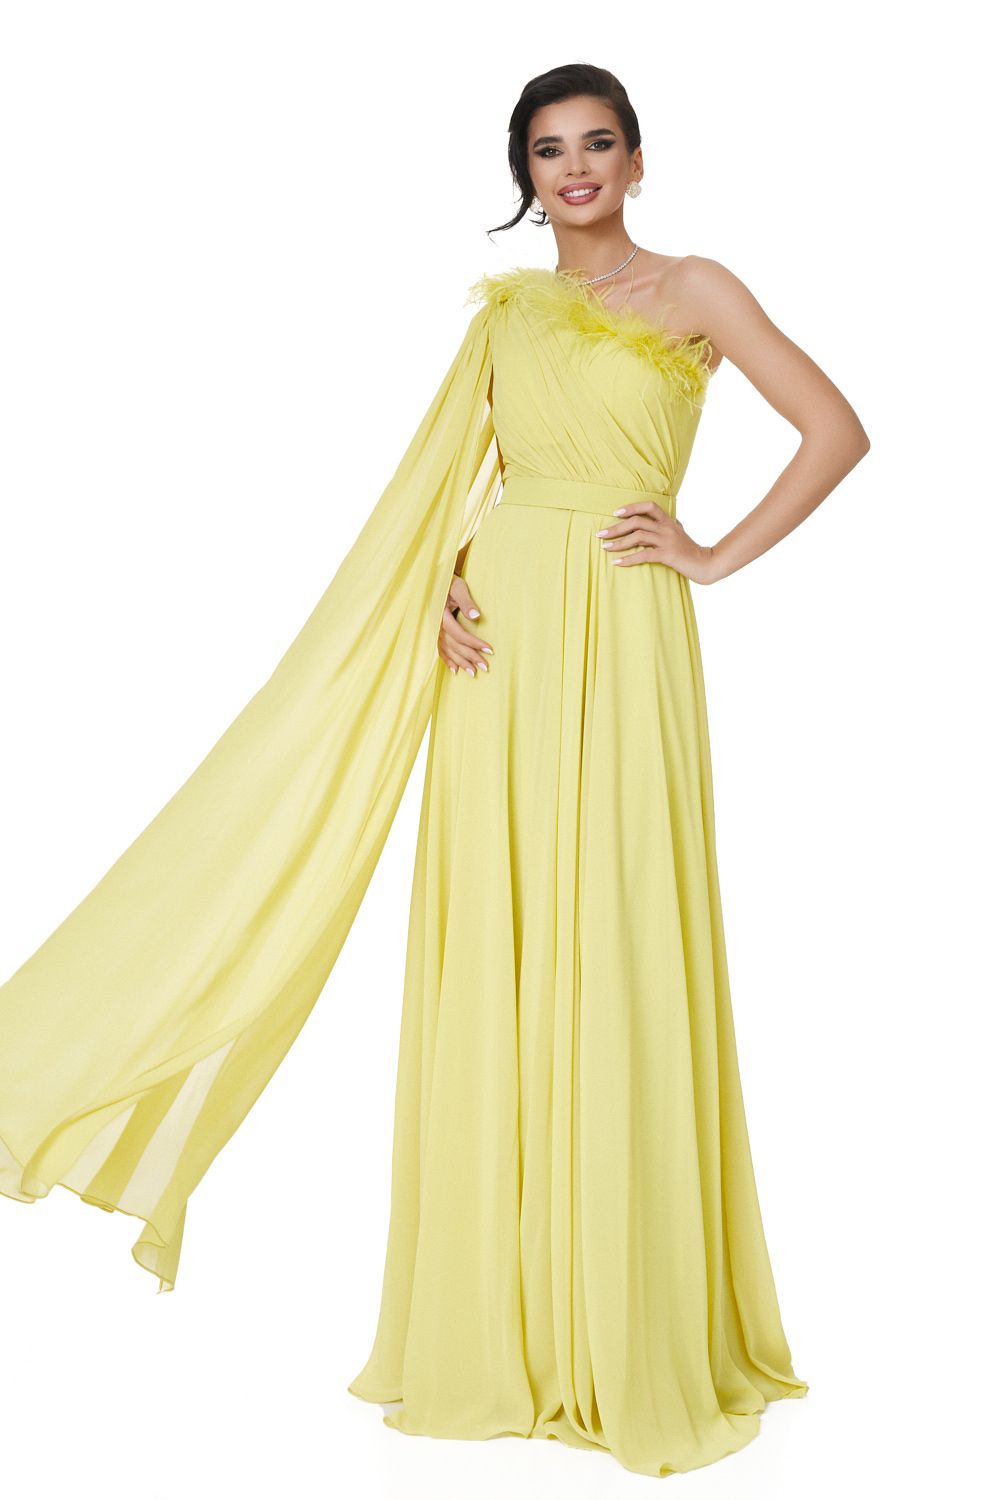 Gabysa Bogas yellow long dress for ladies